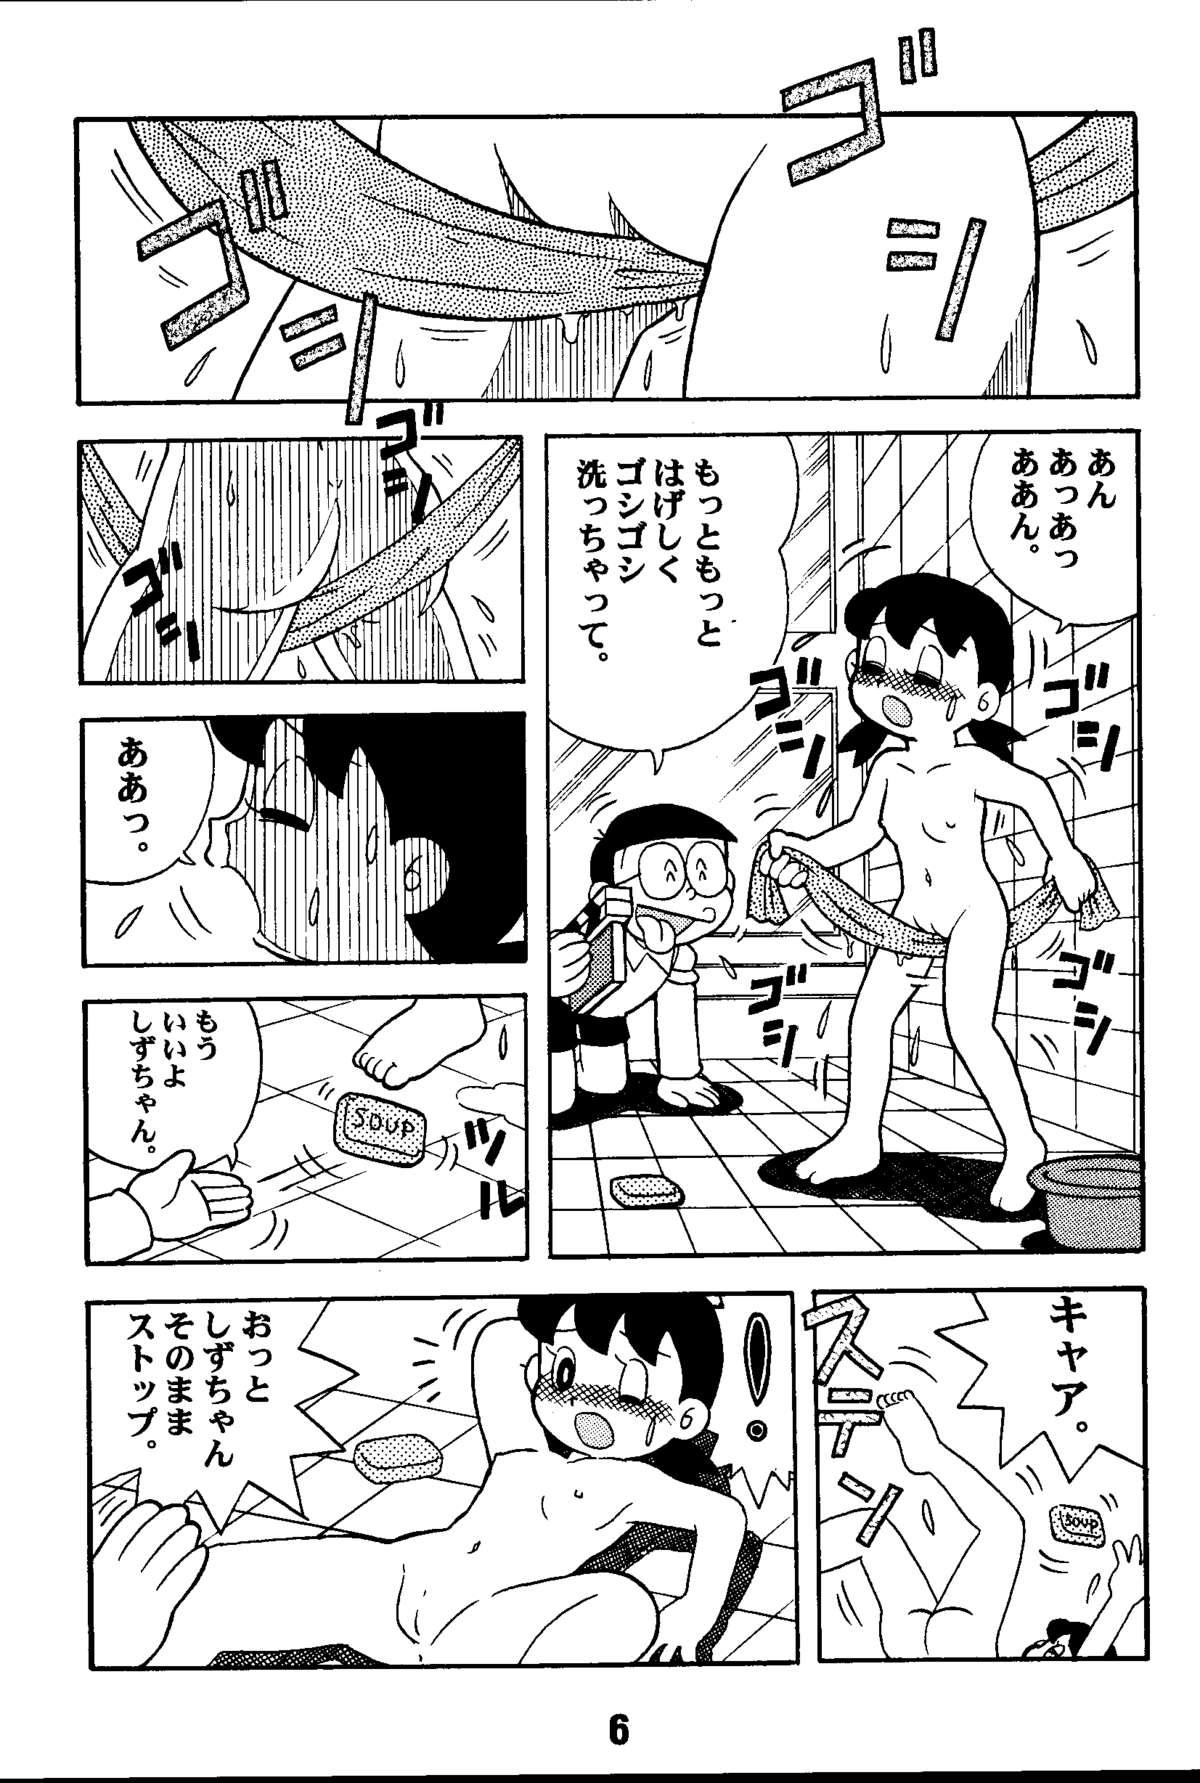 Job Magical Mystery 2 - Doraemon Esper mami 21 emon Panties - Page 6